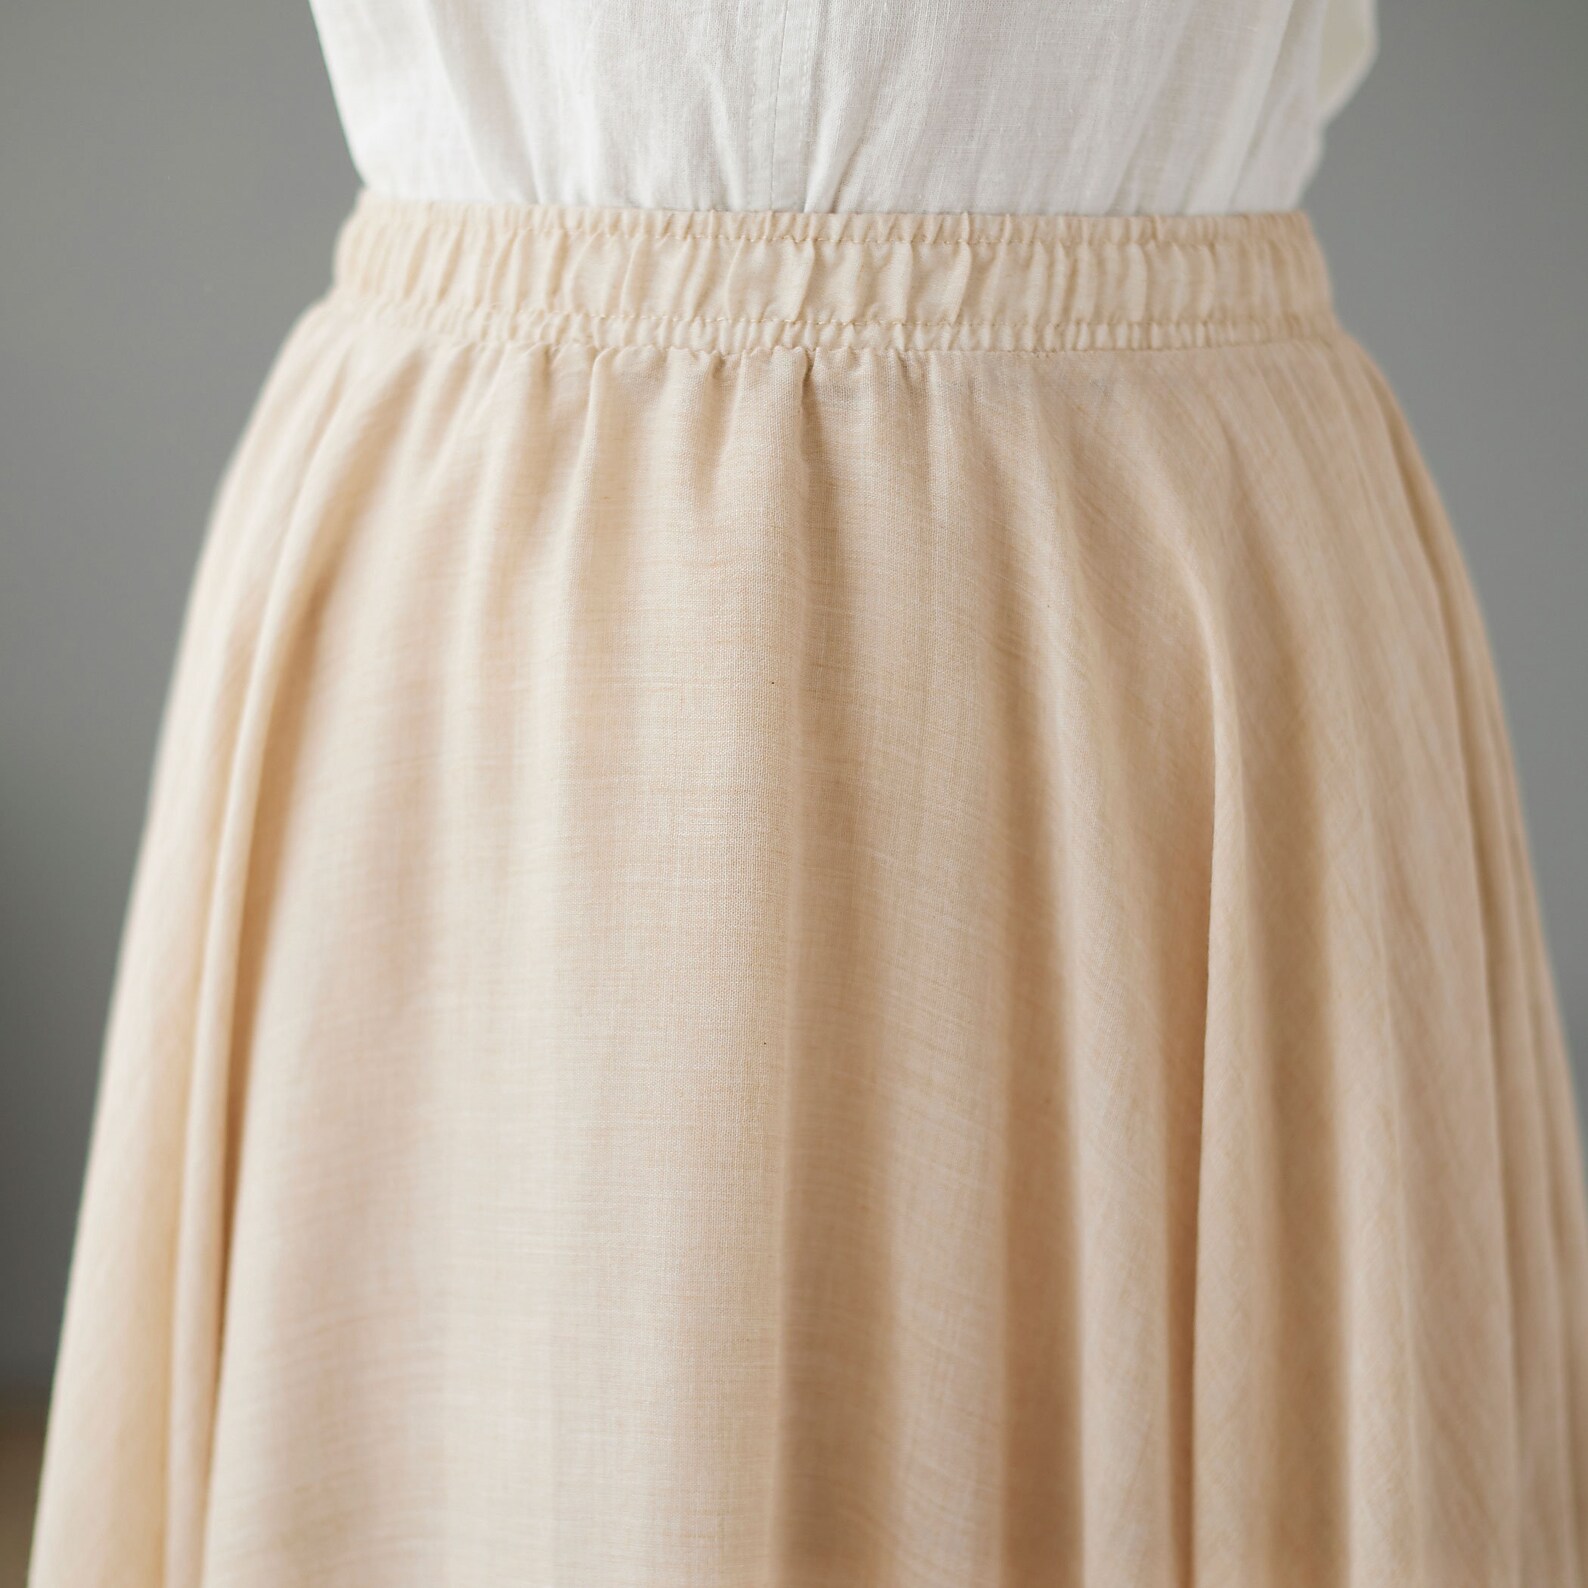 Buy Women's Flowy Circle Maxi Skirt Plus Size Cotton Linen Online in ...